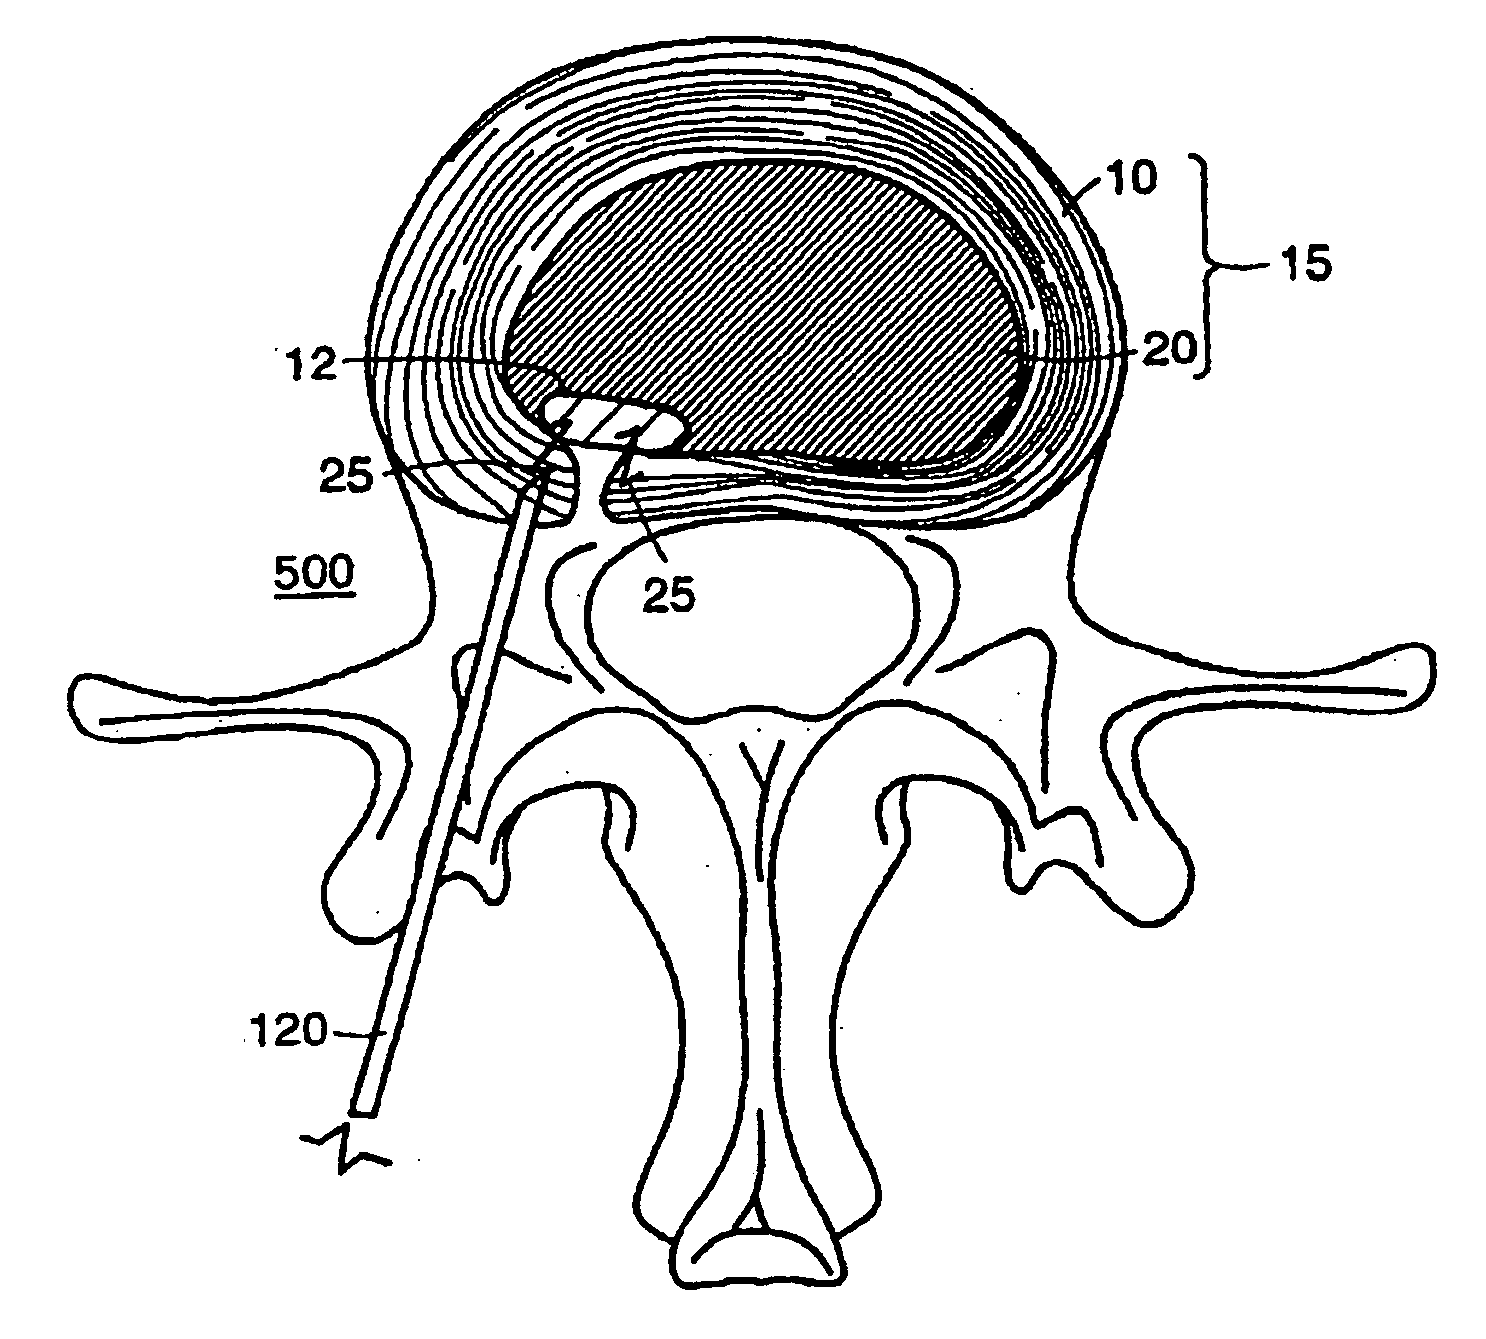 Intervertebral anulus and nucleus augmentation